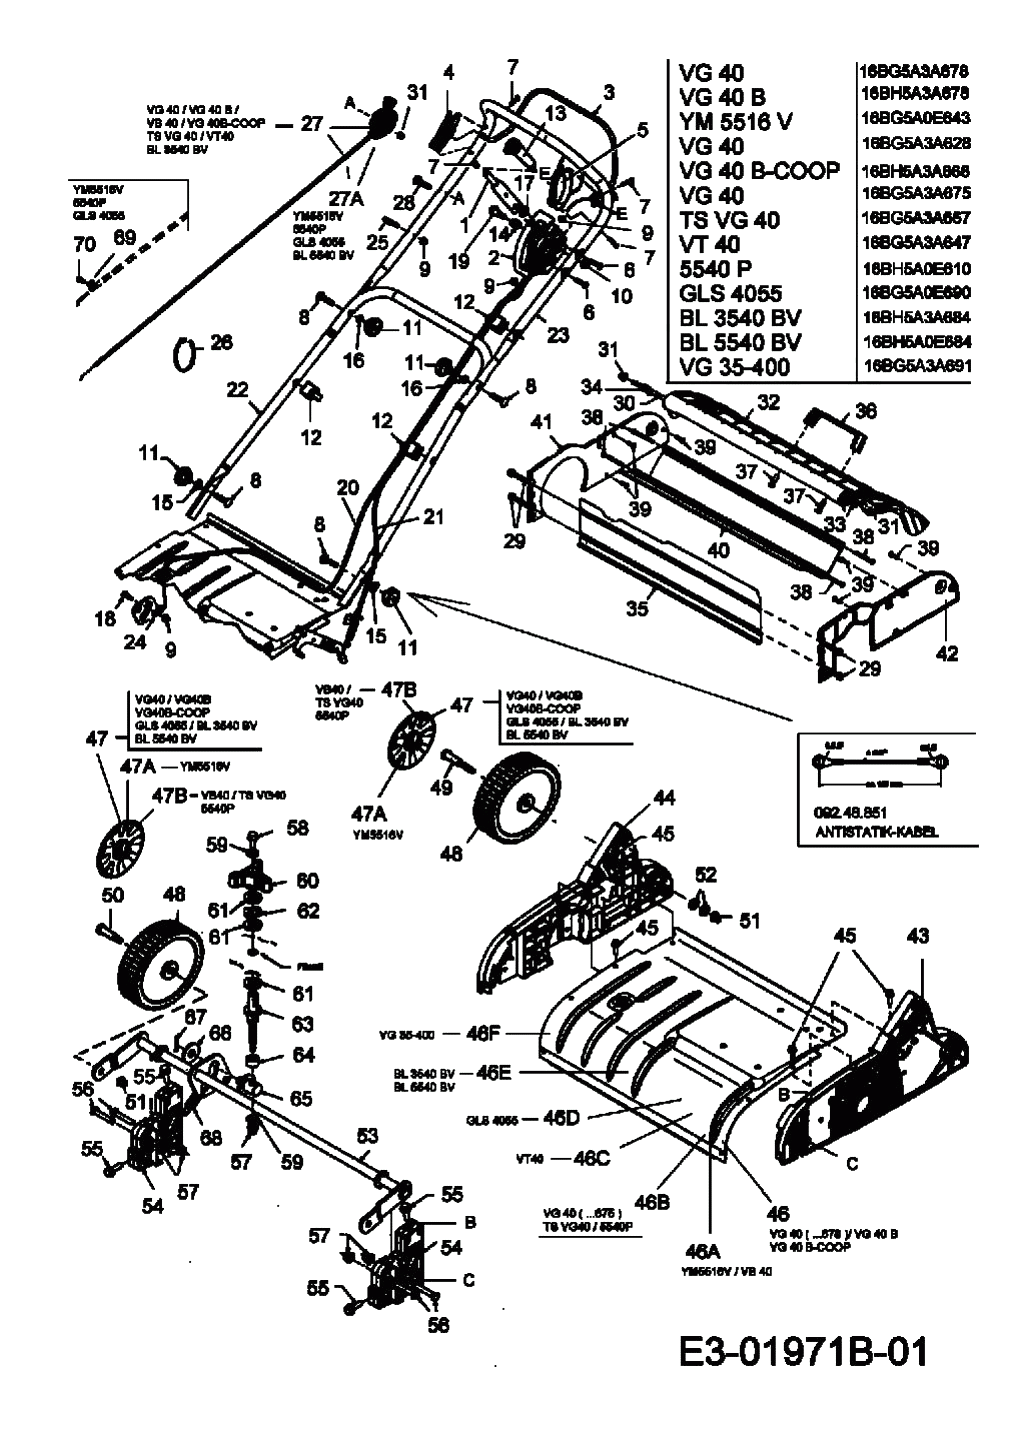 MTD Артикул 16BH5A3A678 (год выпуска 2006). Ручка, регулятор высоты, колеса